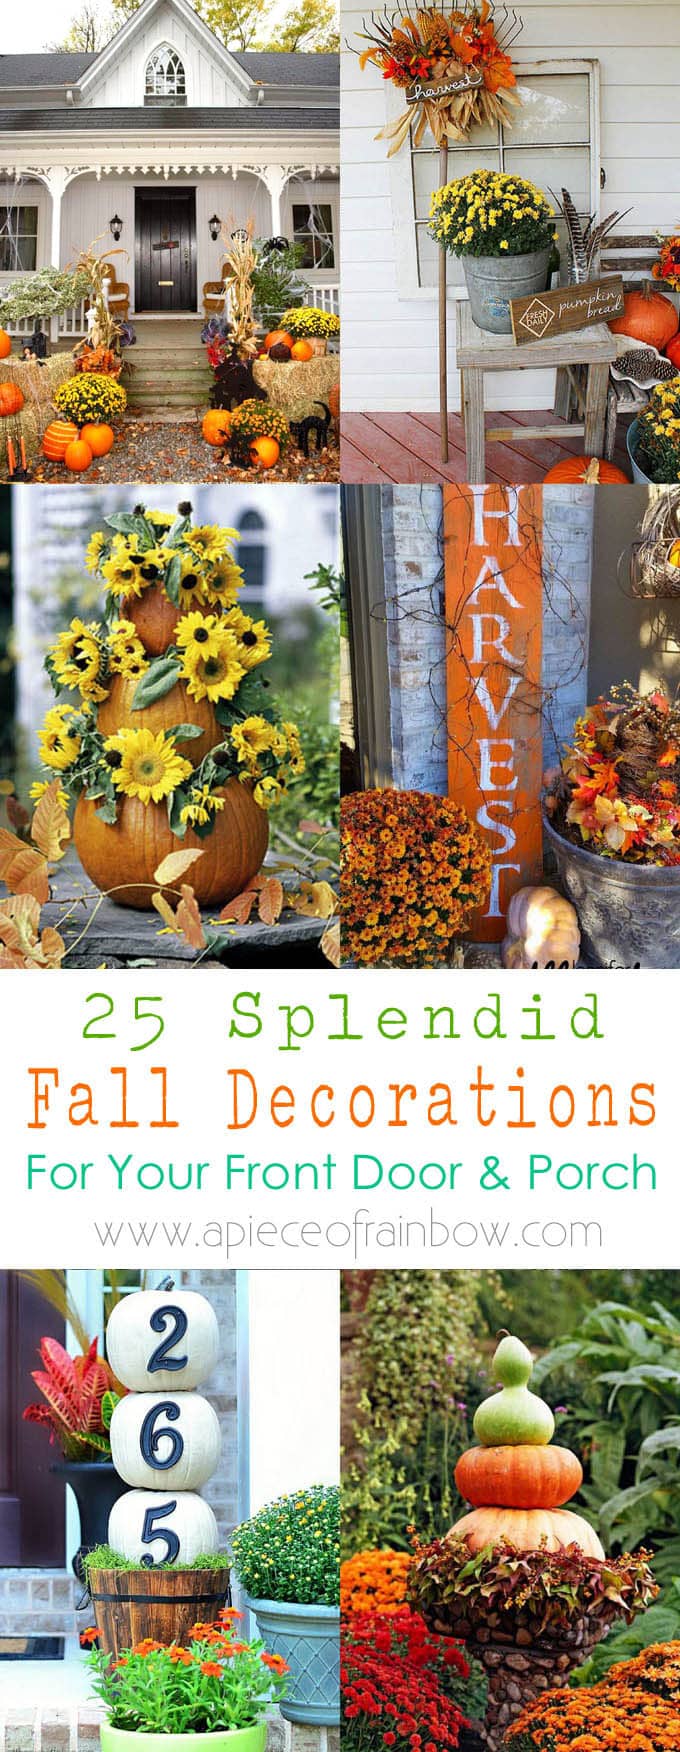 25 Splendid Diy Fall Outdoor Decorations A Piece Of Rainbow